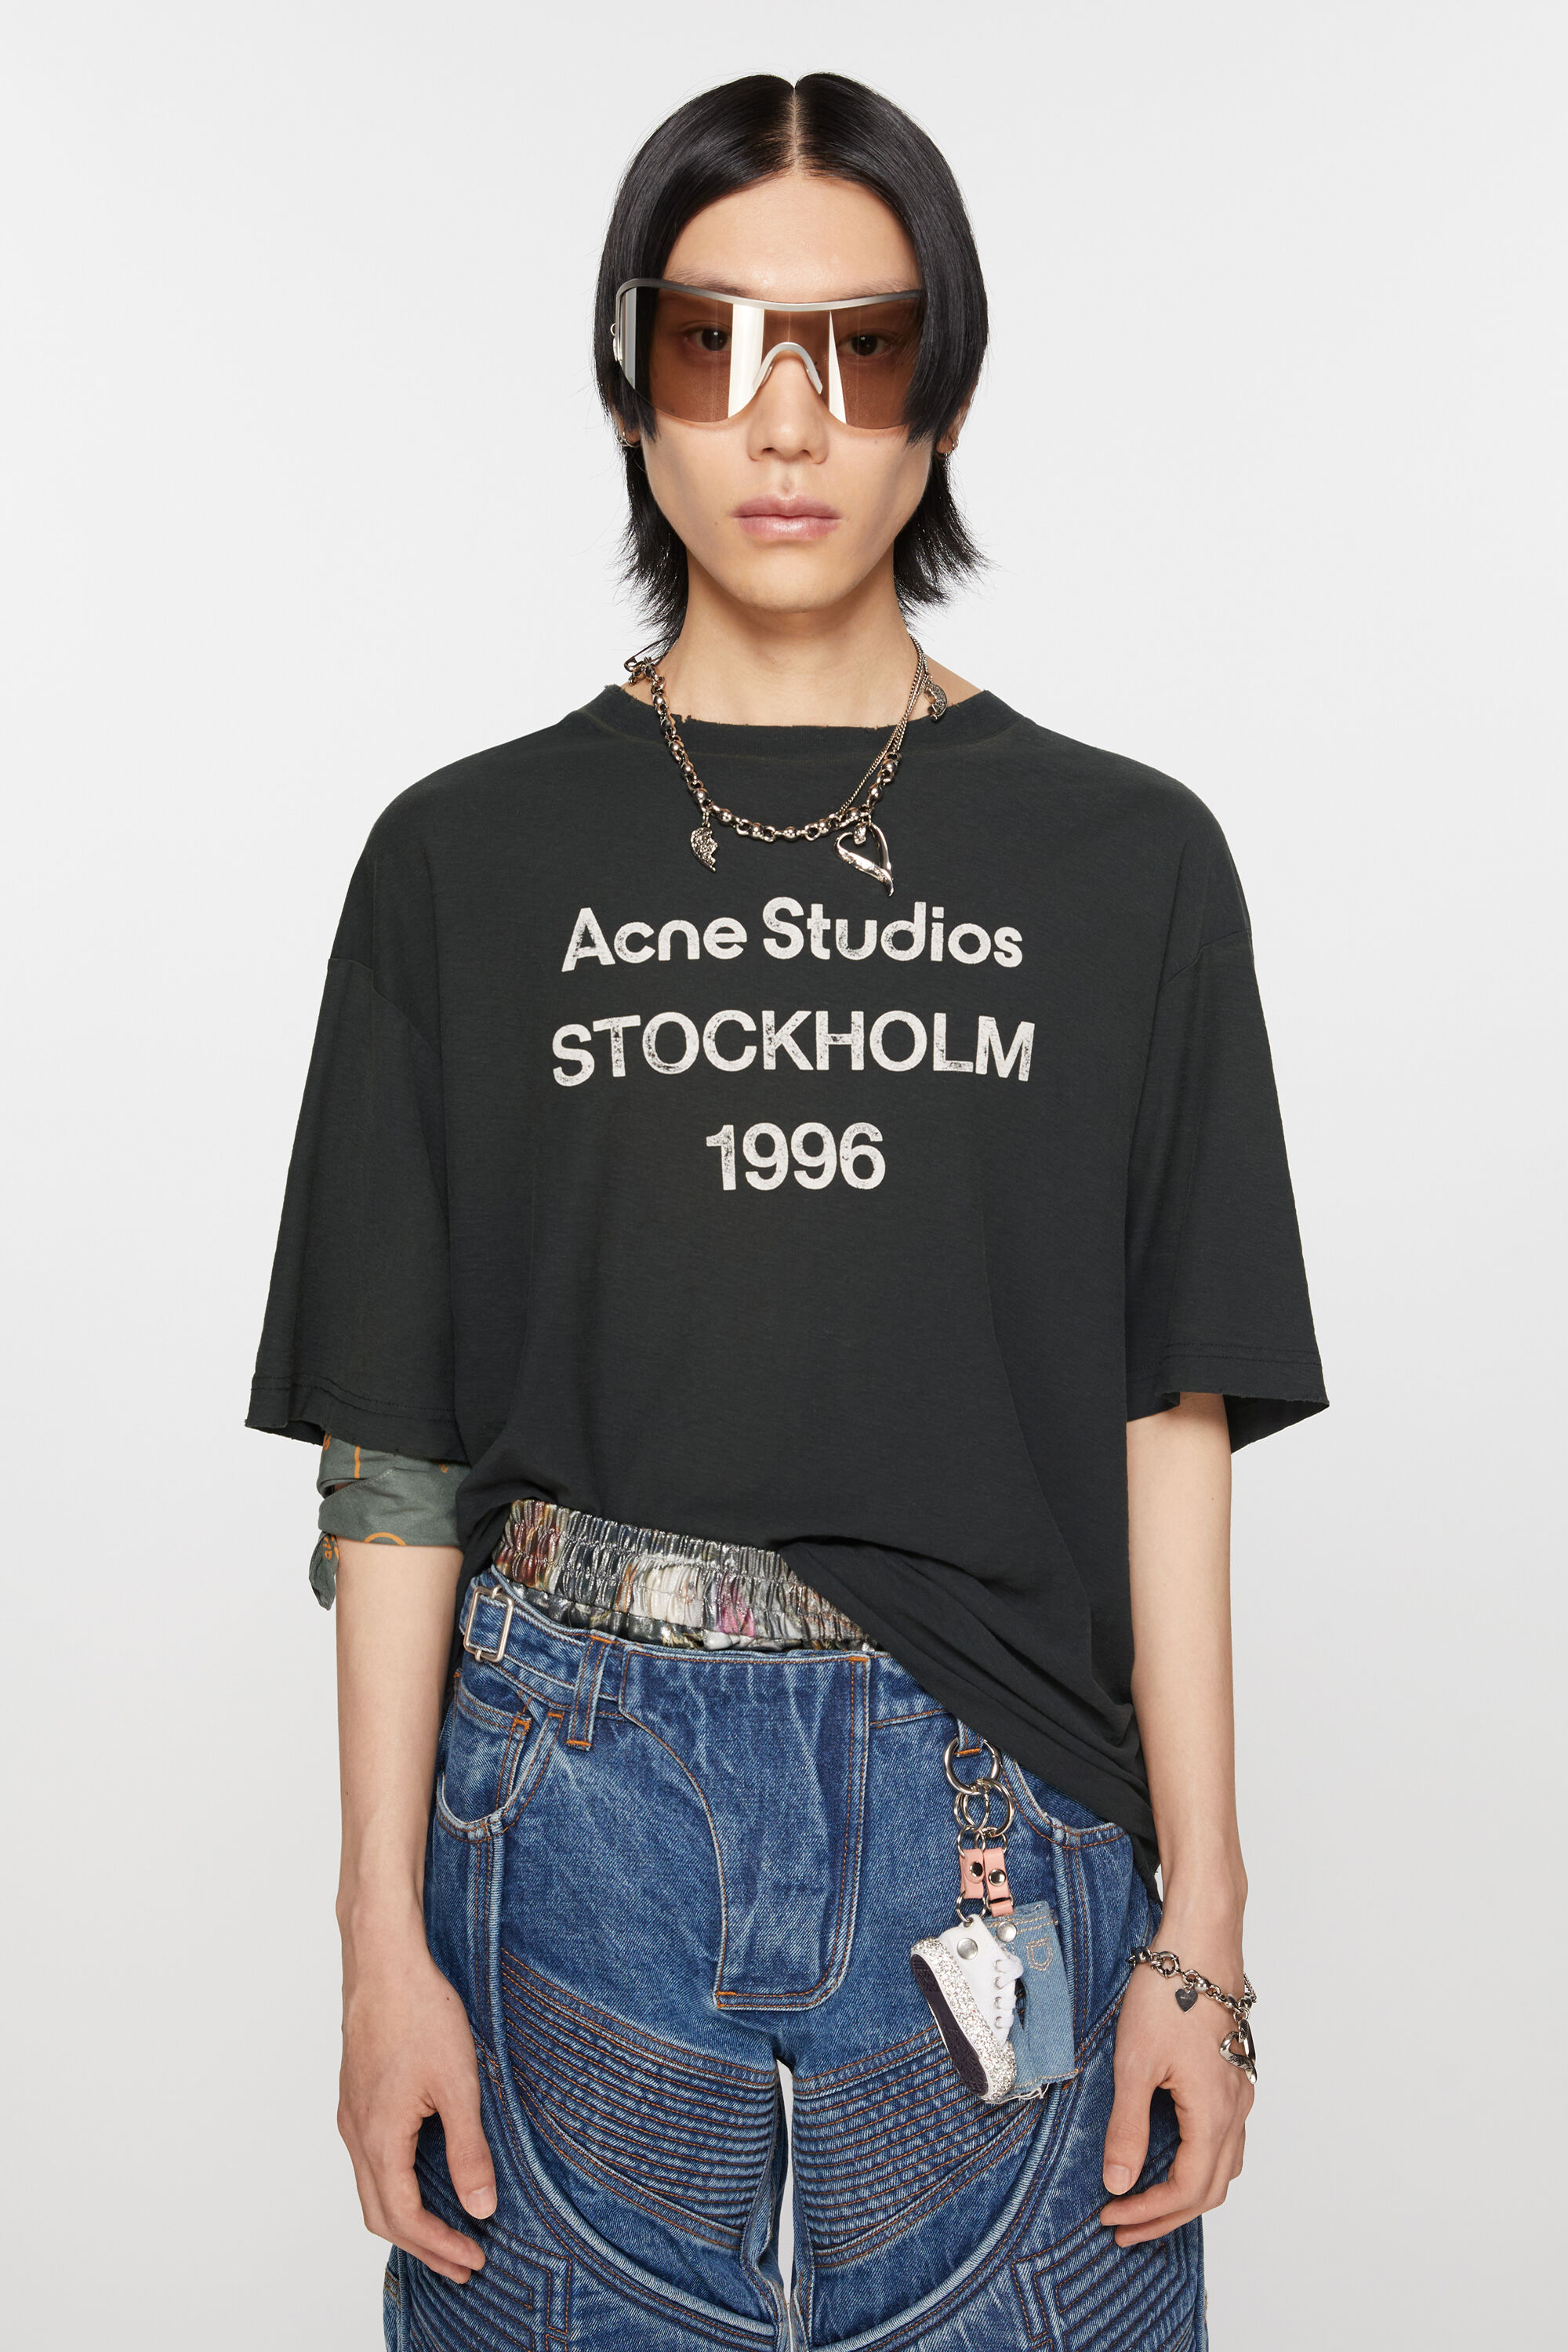 Acne Studios – メンズTシャツ